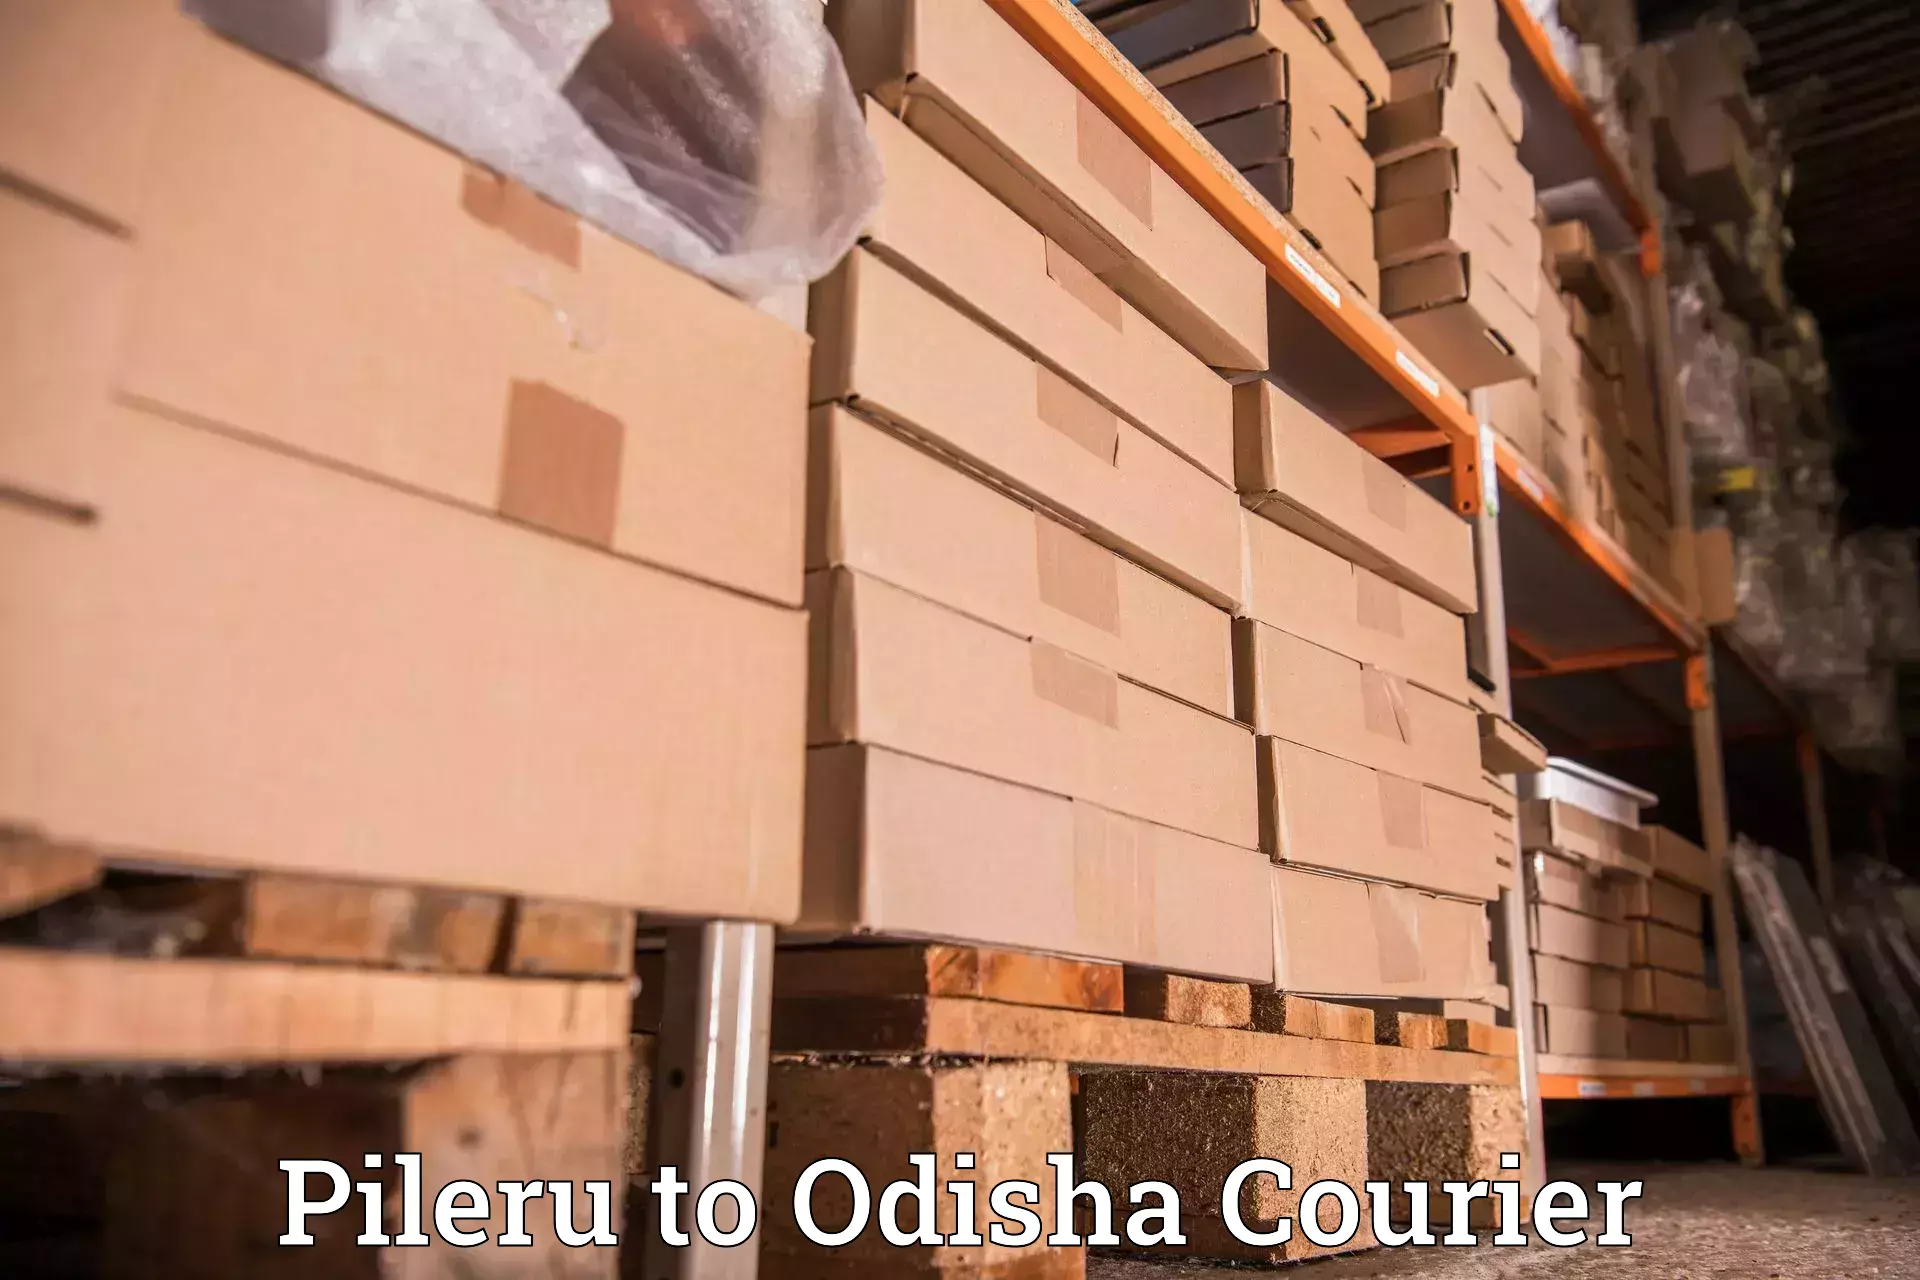 Courier service partnerships Pileru to Sohela